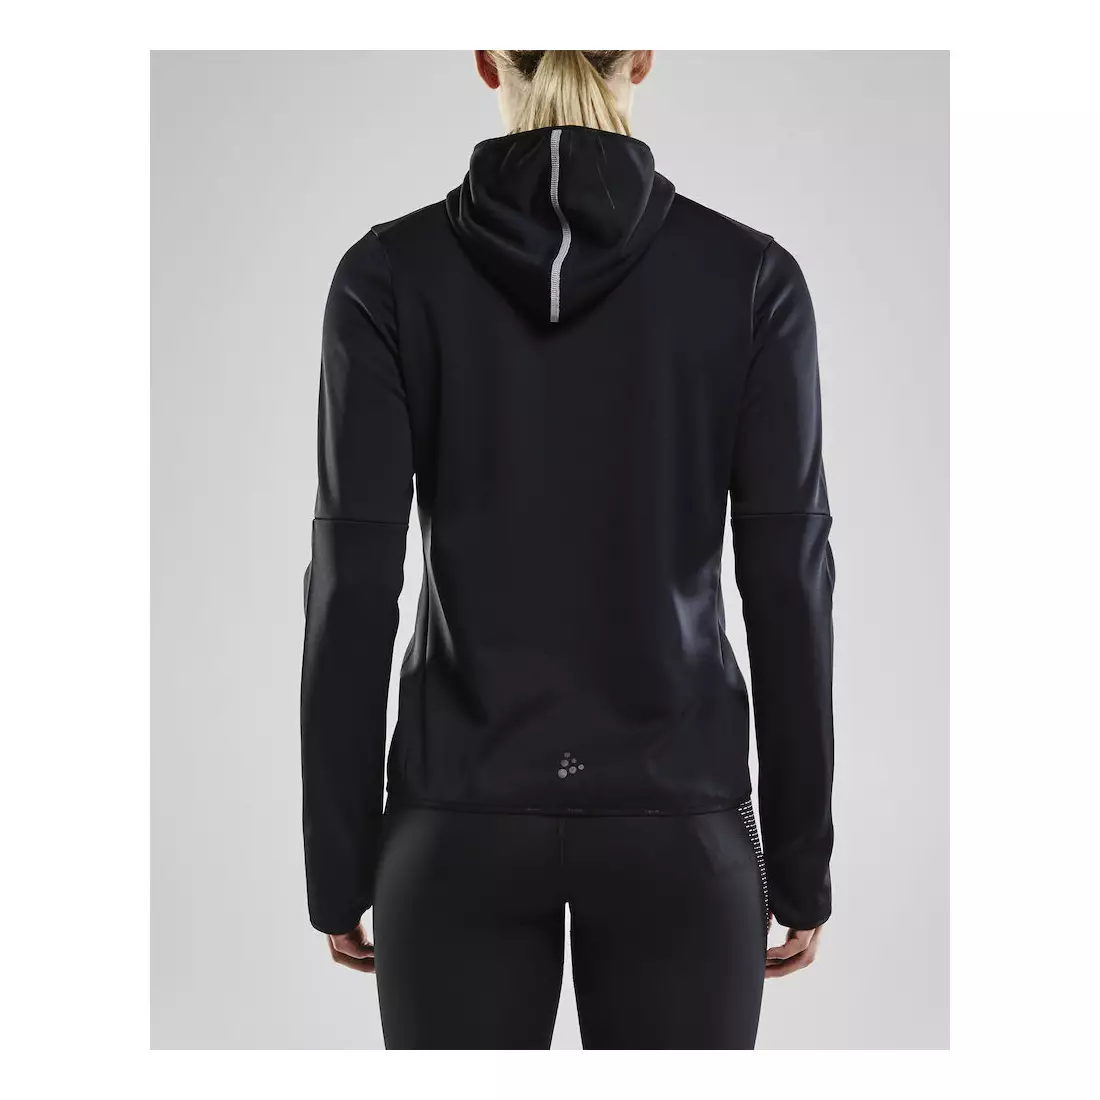 CRAFT EAZE női meleg sportpulóver kapucnival, fekete 1906033-999000